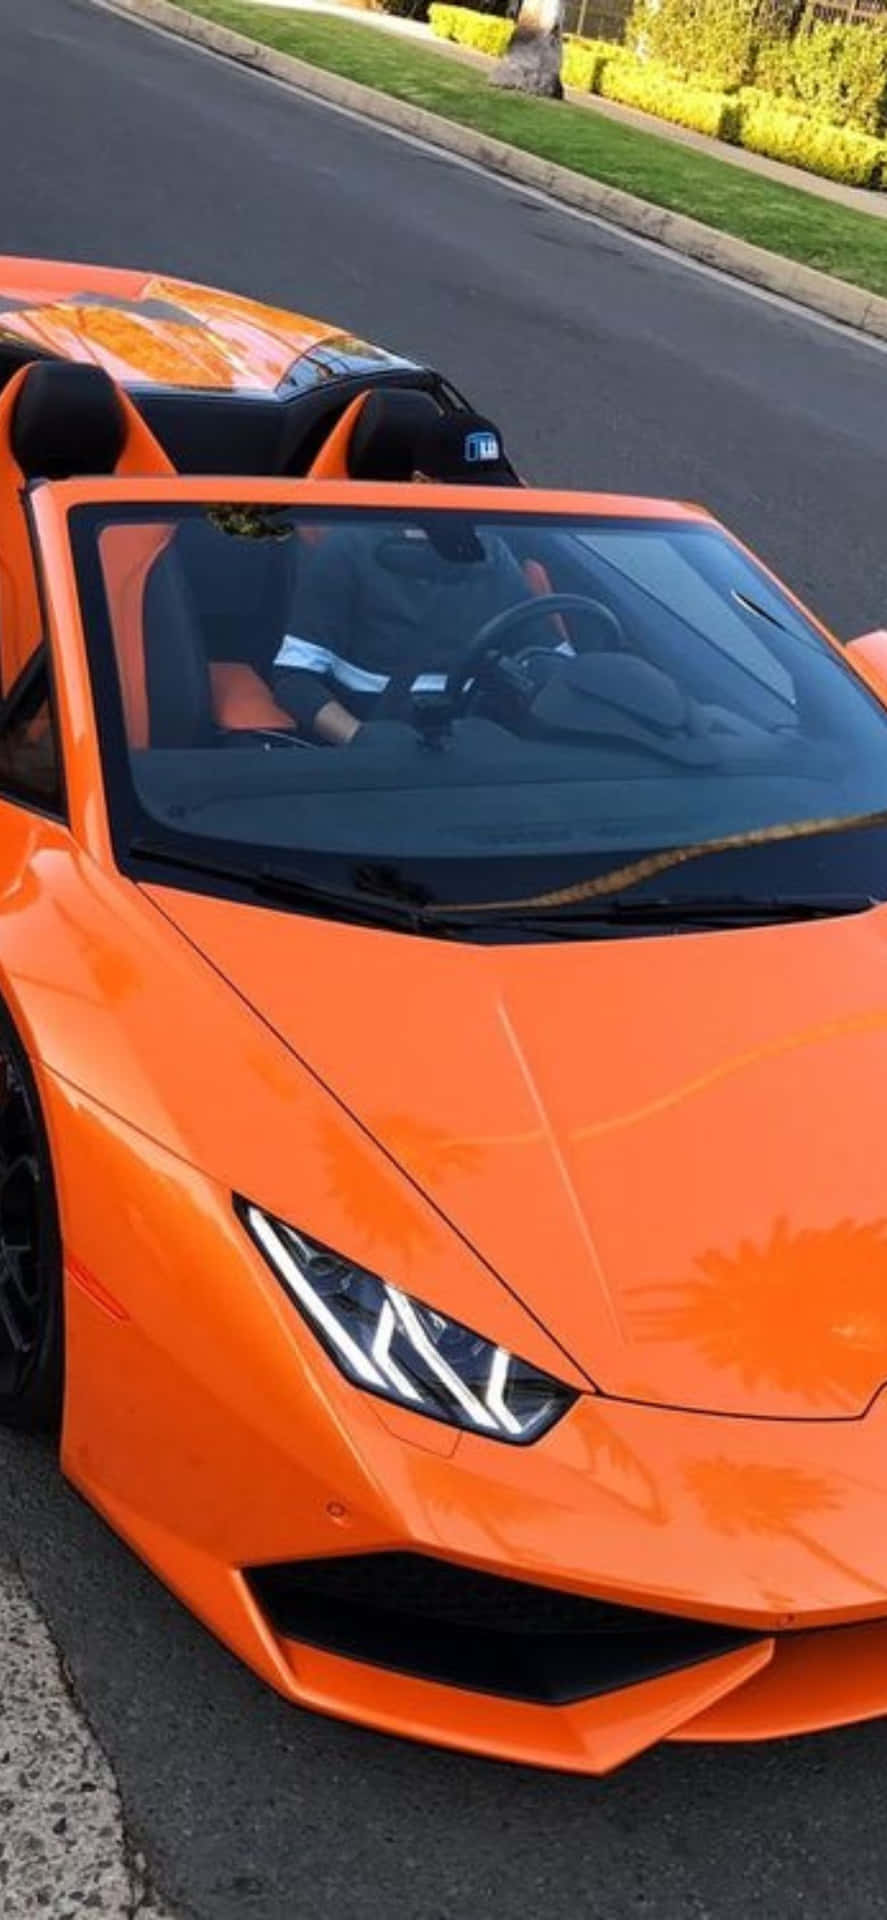 iPhone XS Max Lamborghini Huracan Orange Car Background